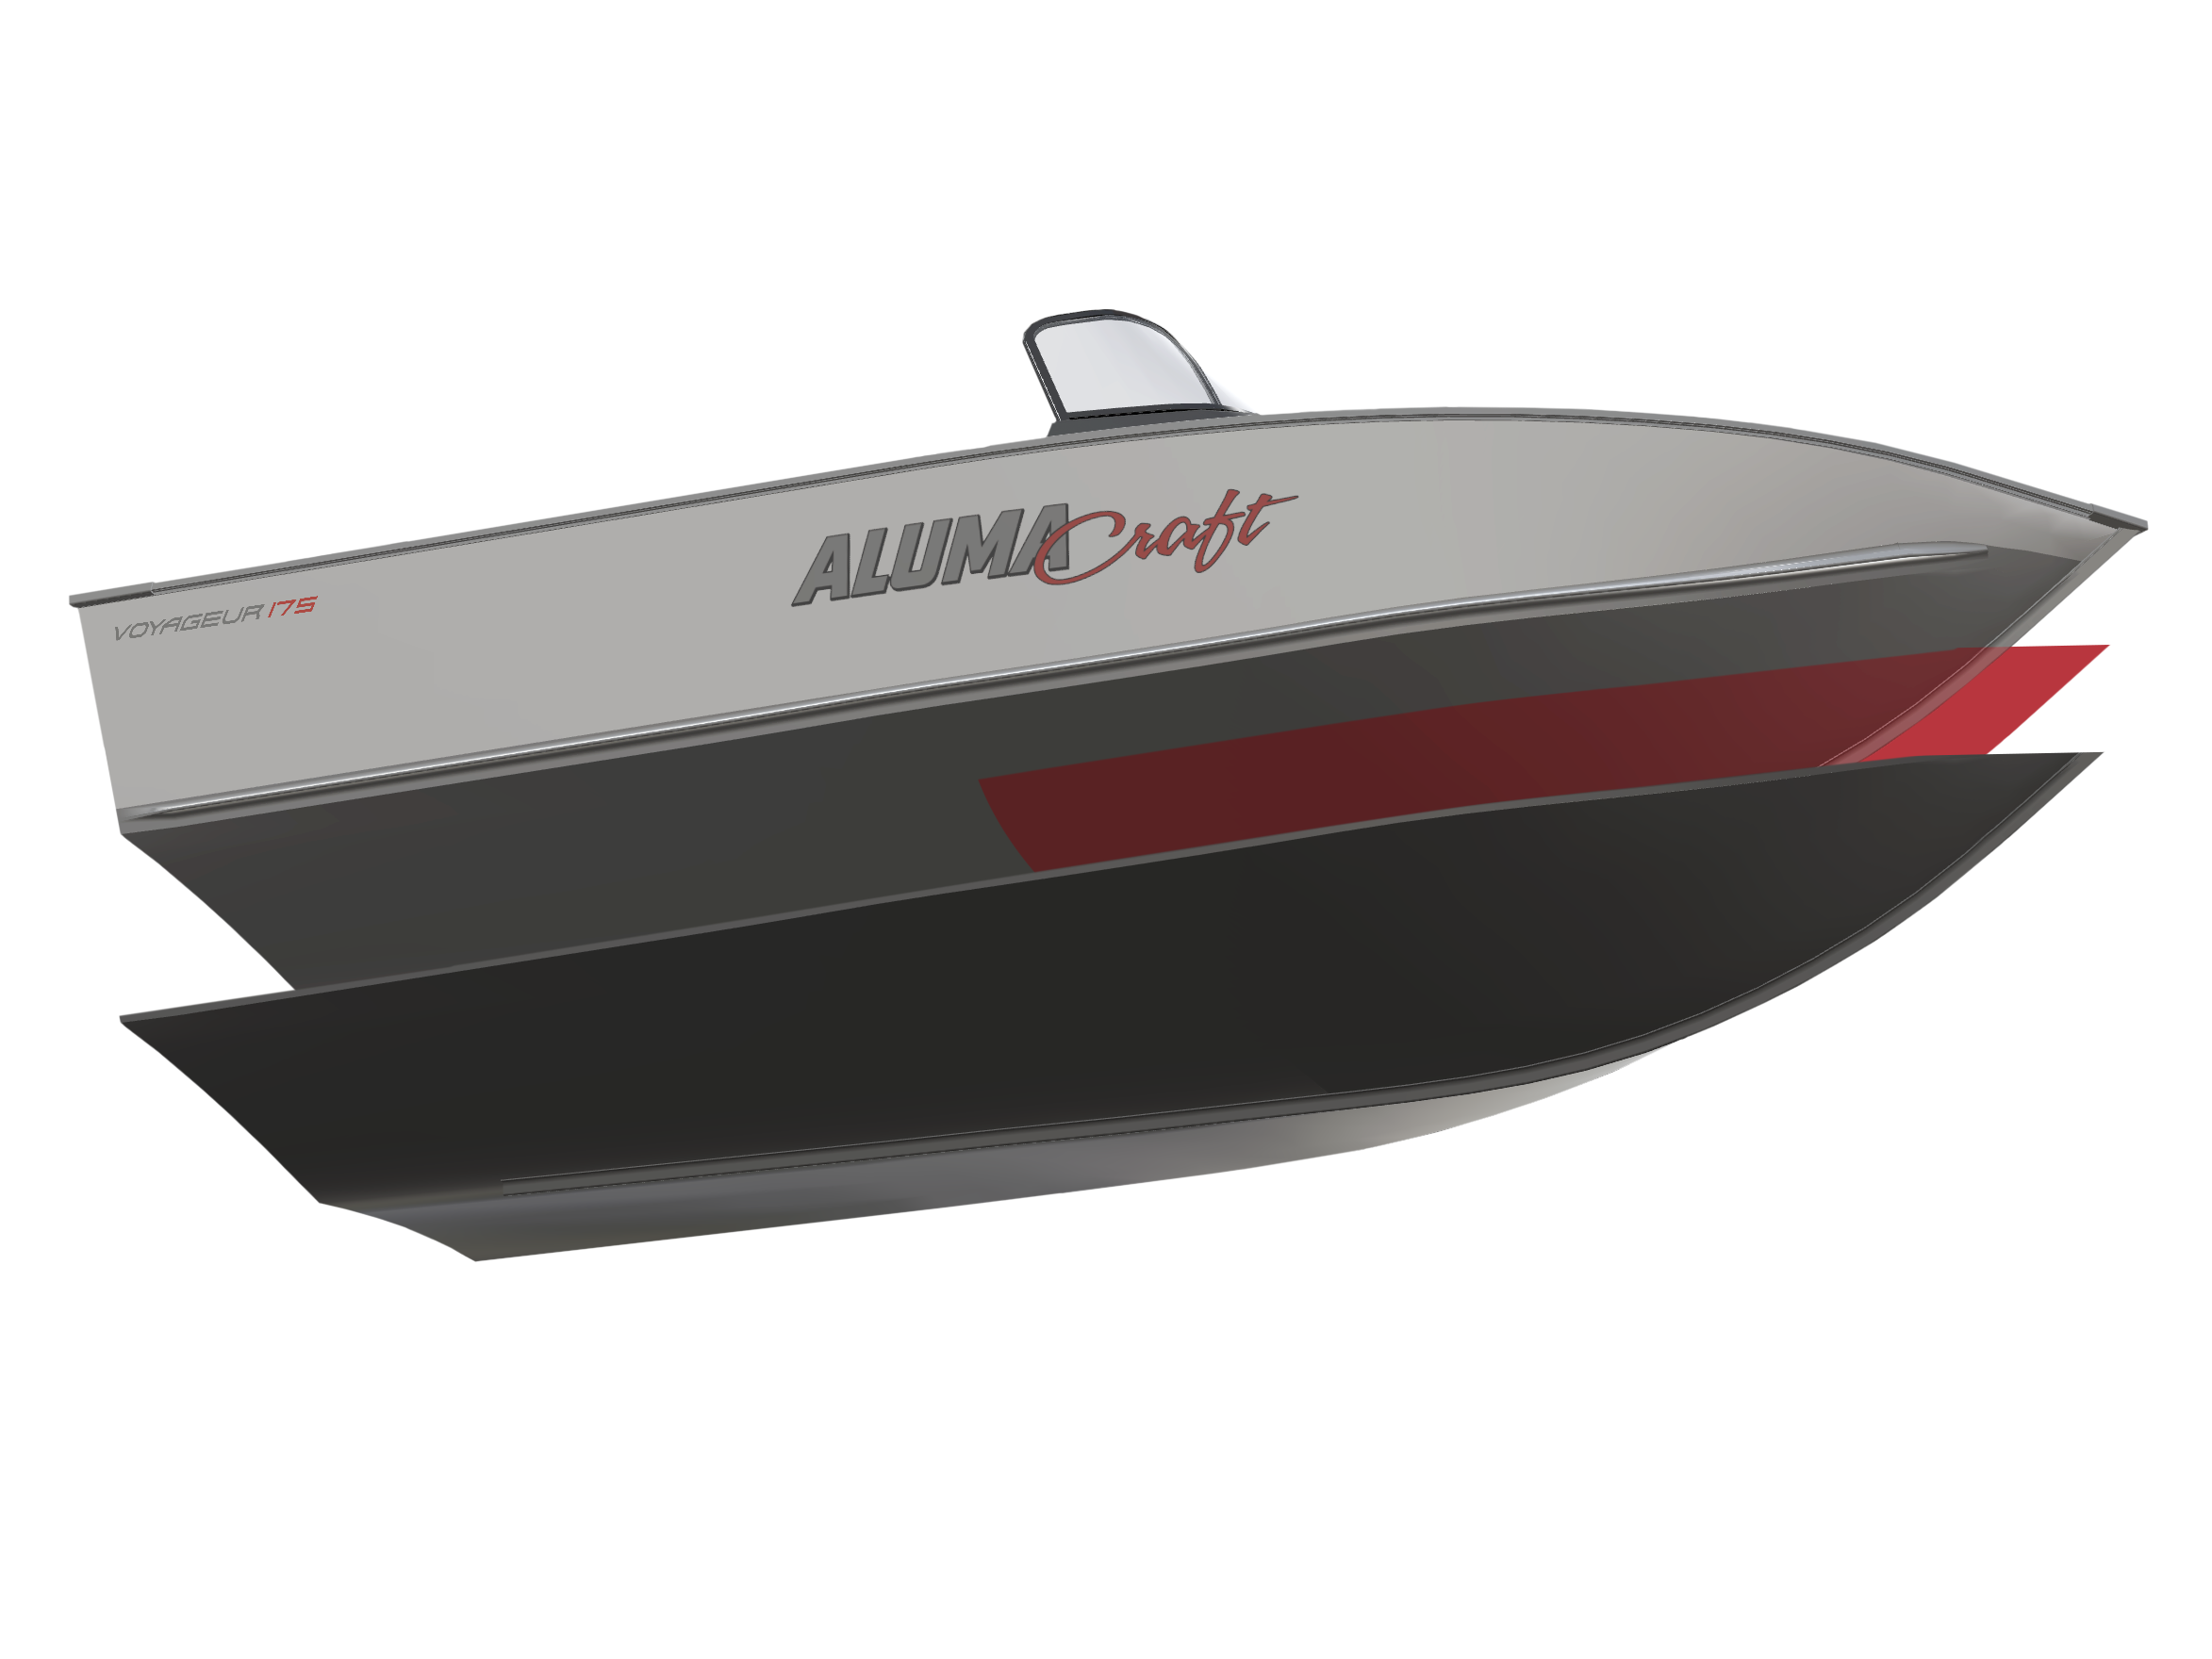 Alumacraft Voyageur : Technologie de coque